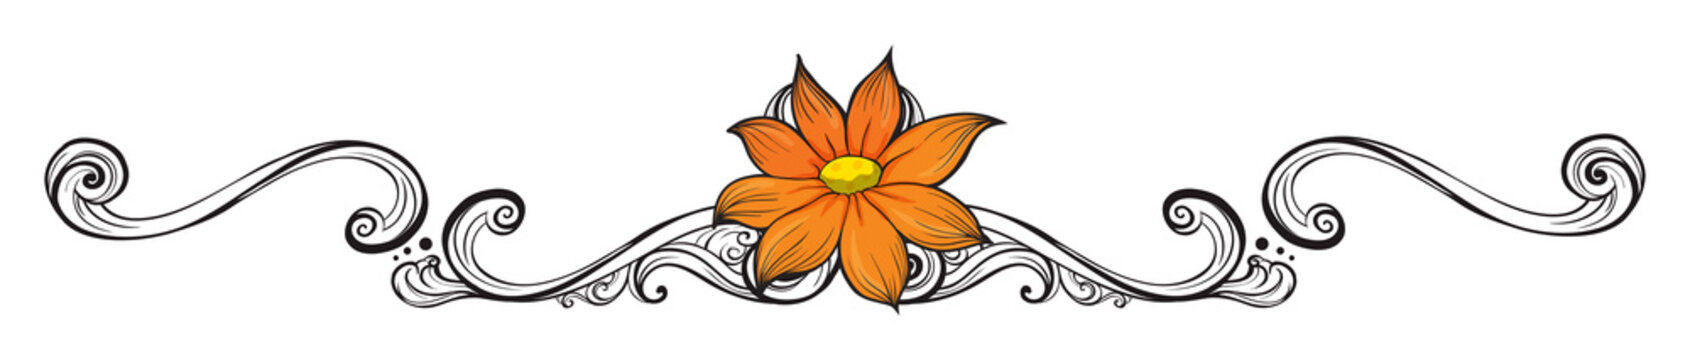 An orange flower border